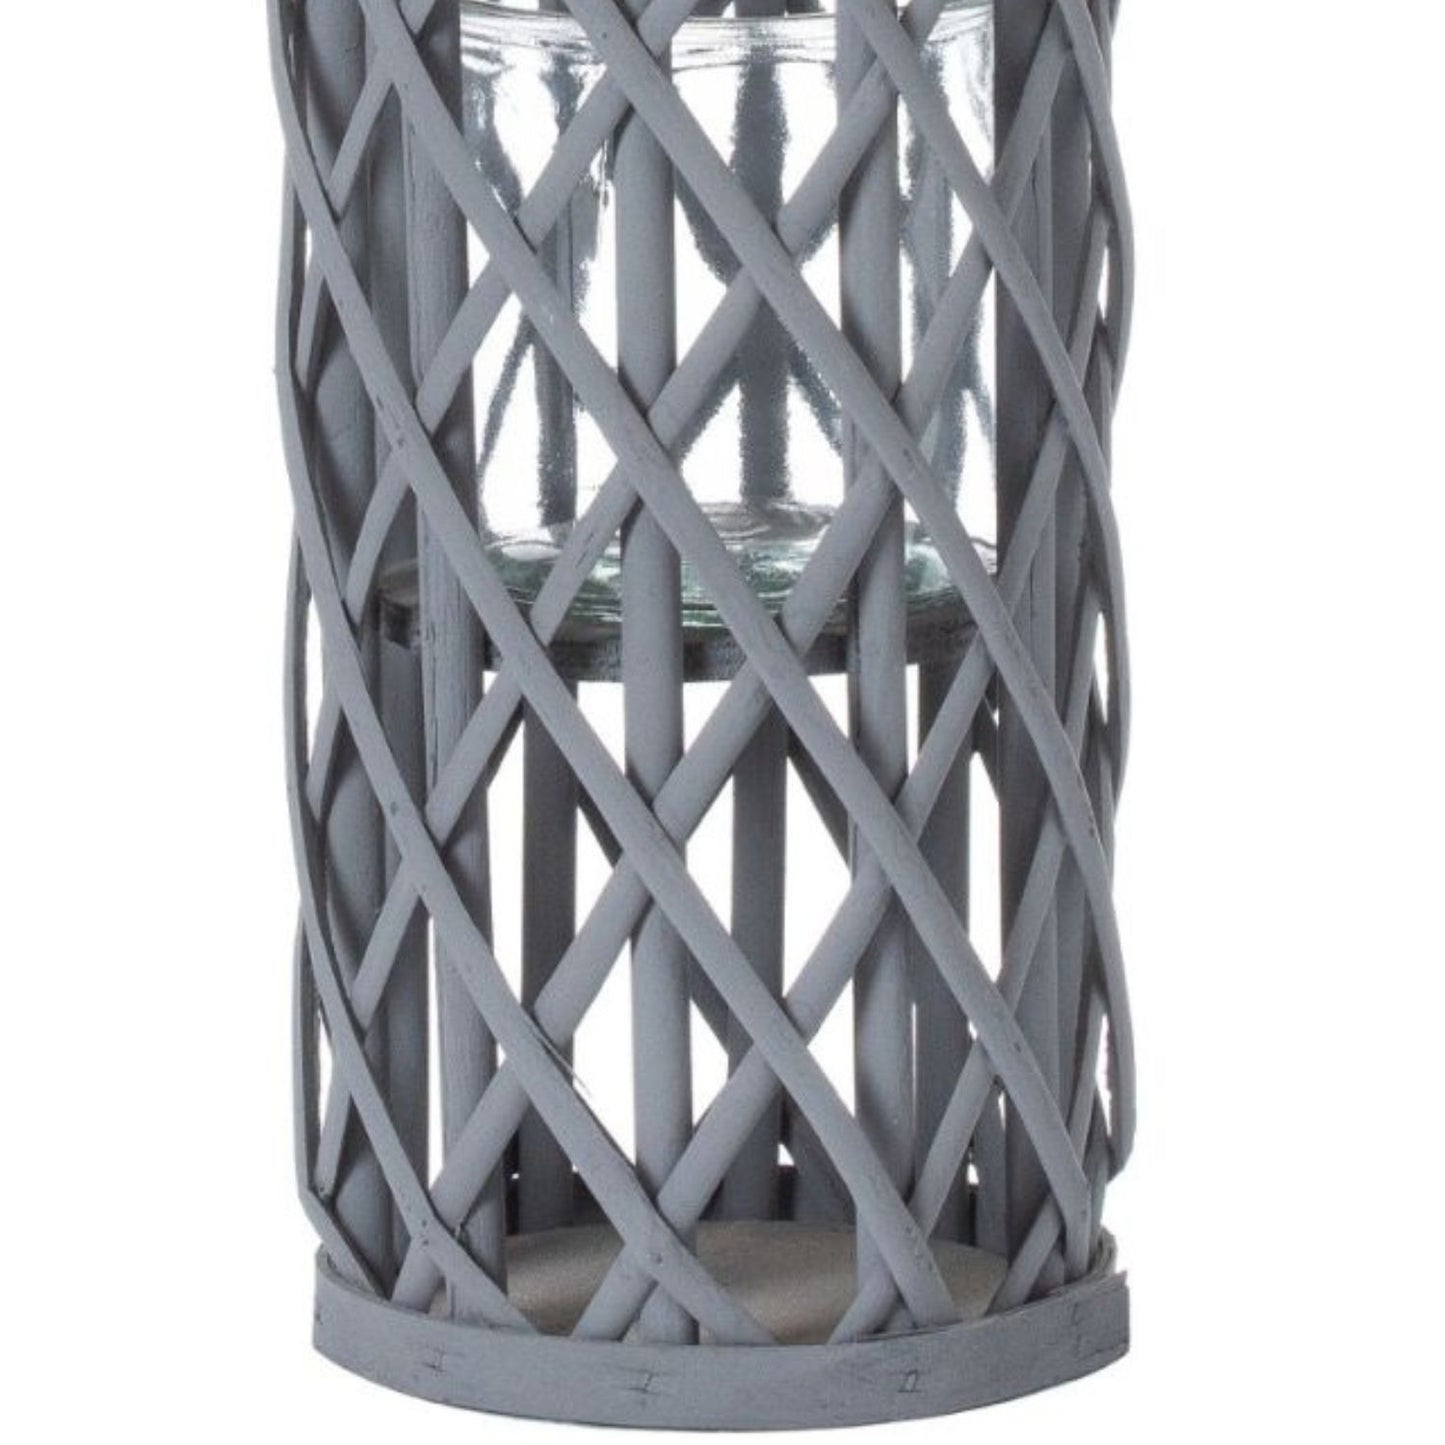 Small Wicker Cylindrical Hurricane Lantern - Grey